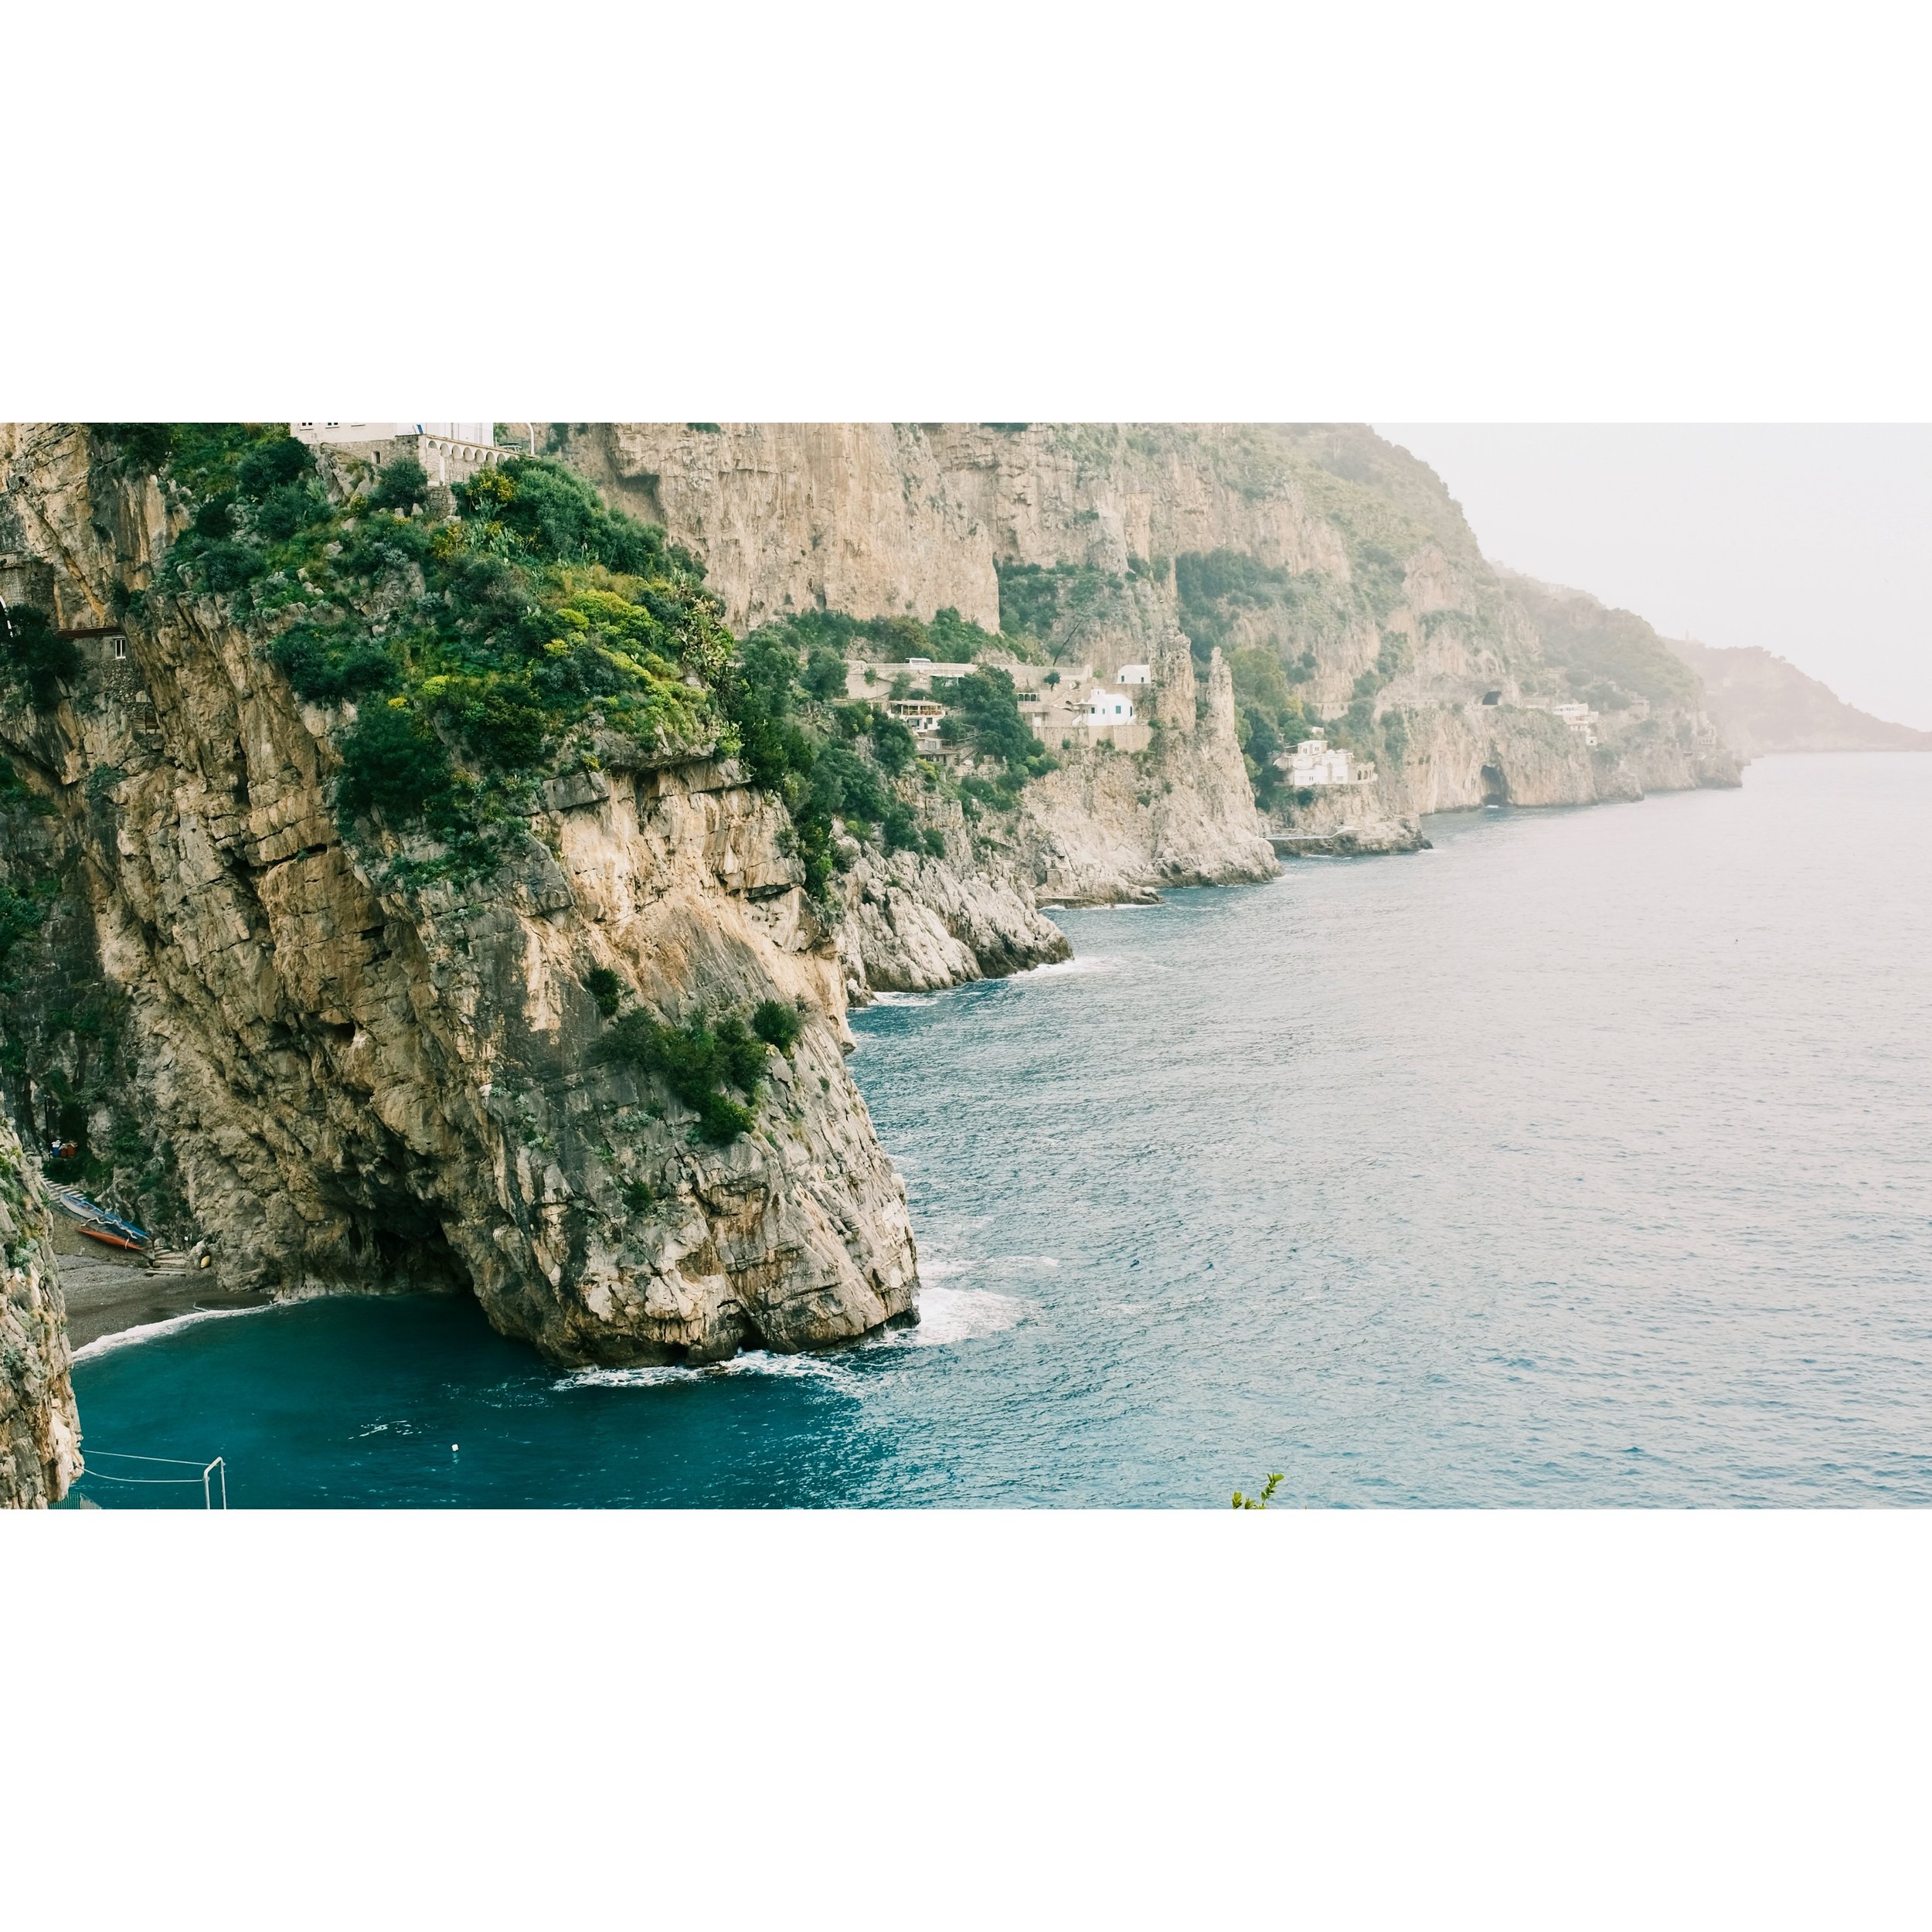 Amalfi 🇮🇹

.
.
.
.
.
.
.

#love #instagood #tb #photooftheday #photography #art #nature #picoftheday #happy #travel  #style #instadaily 
#beauty #instalike #photo #traveltheworld #travelphotography #travelgram #traveling #photographer #photograph #